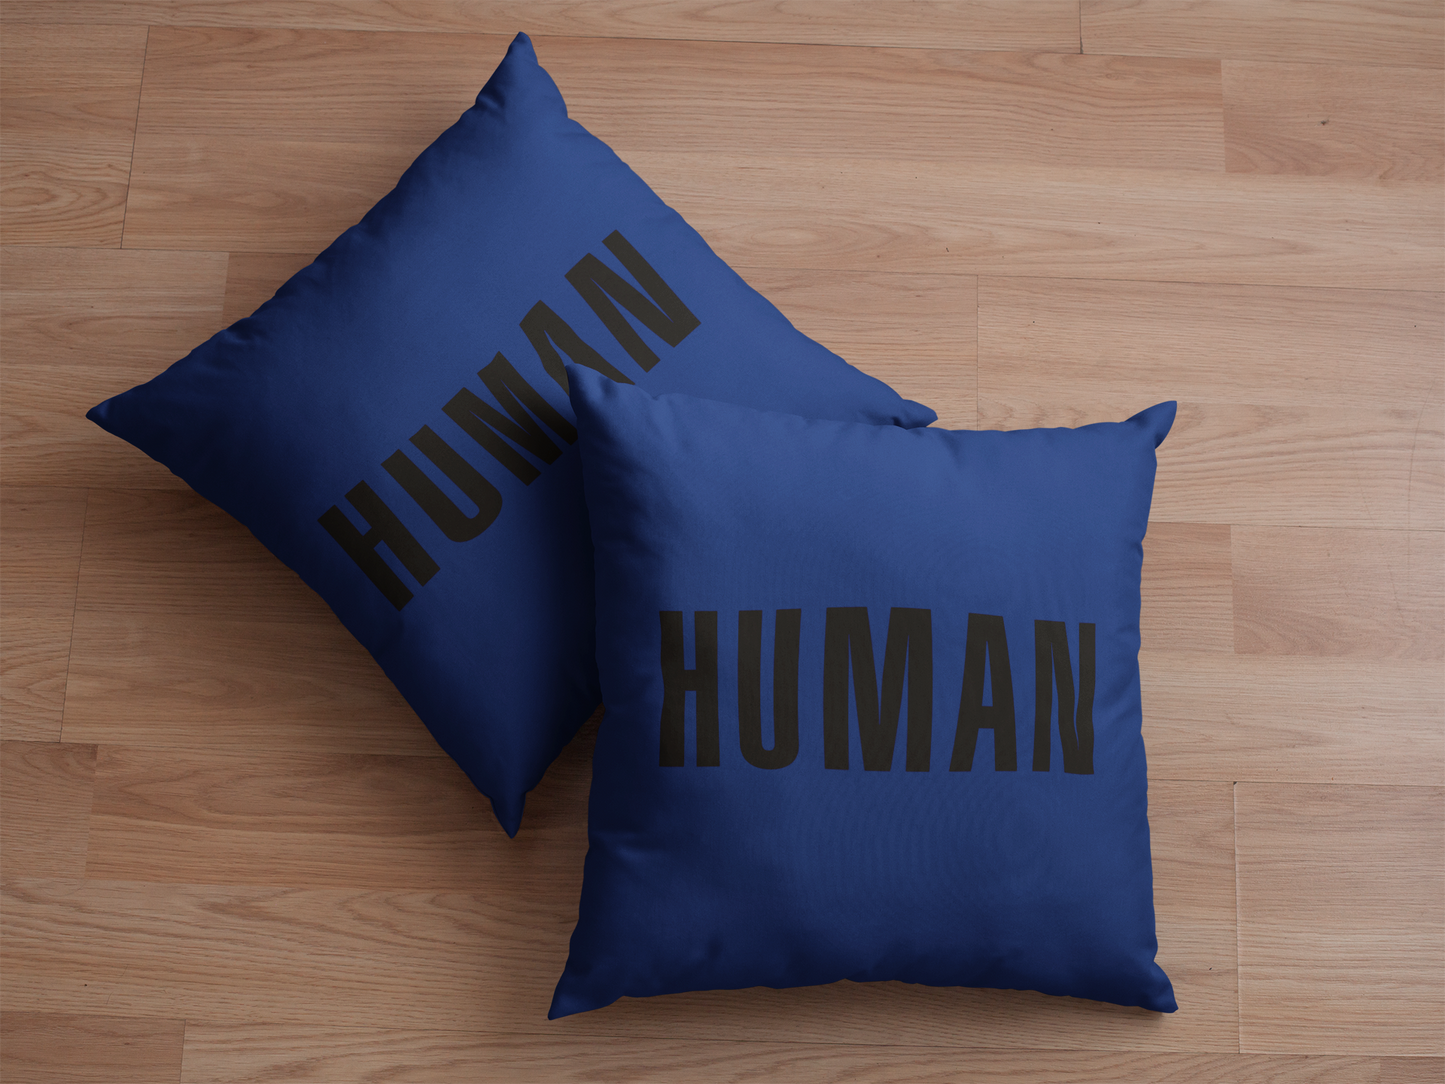 Cushion Cover - HUMAN (Black Text)